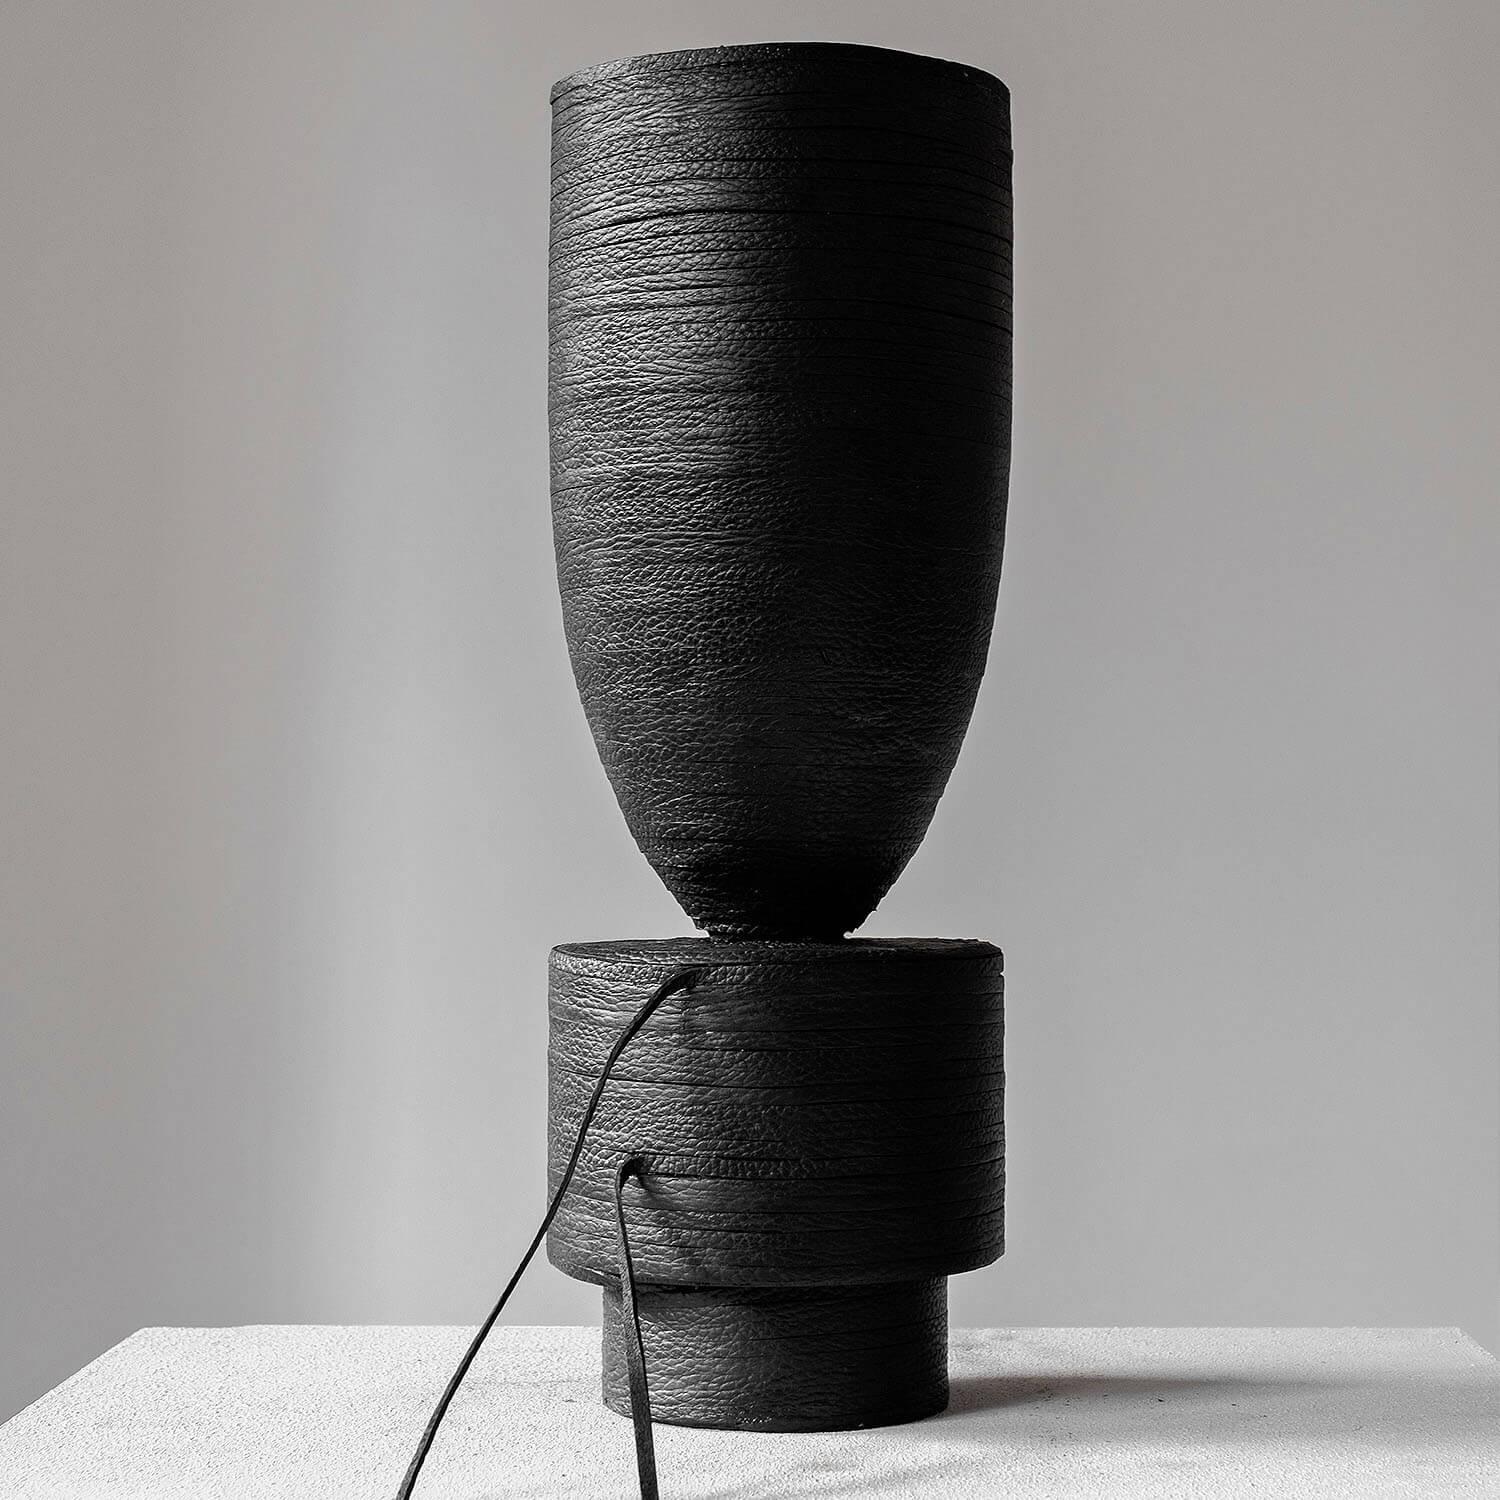 Pot vase leather - Arno Declercq

 
Iroko wood and leather

Measures: 14 cm L x 14 cm W x 40 cm H
5.5” L x 5.5” W x 15.7” H

Material: Iroko wood and leather 

Signed by Arno Declercq.

Arno Declercq
Belgian designer and art dealer who